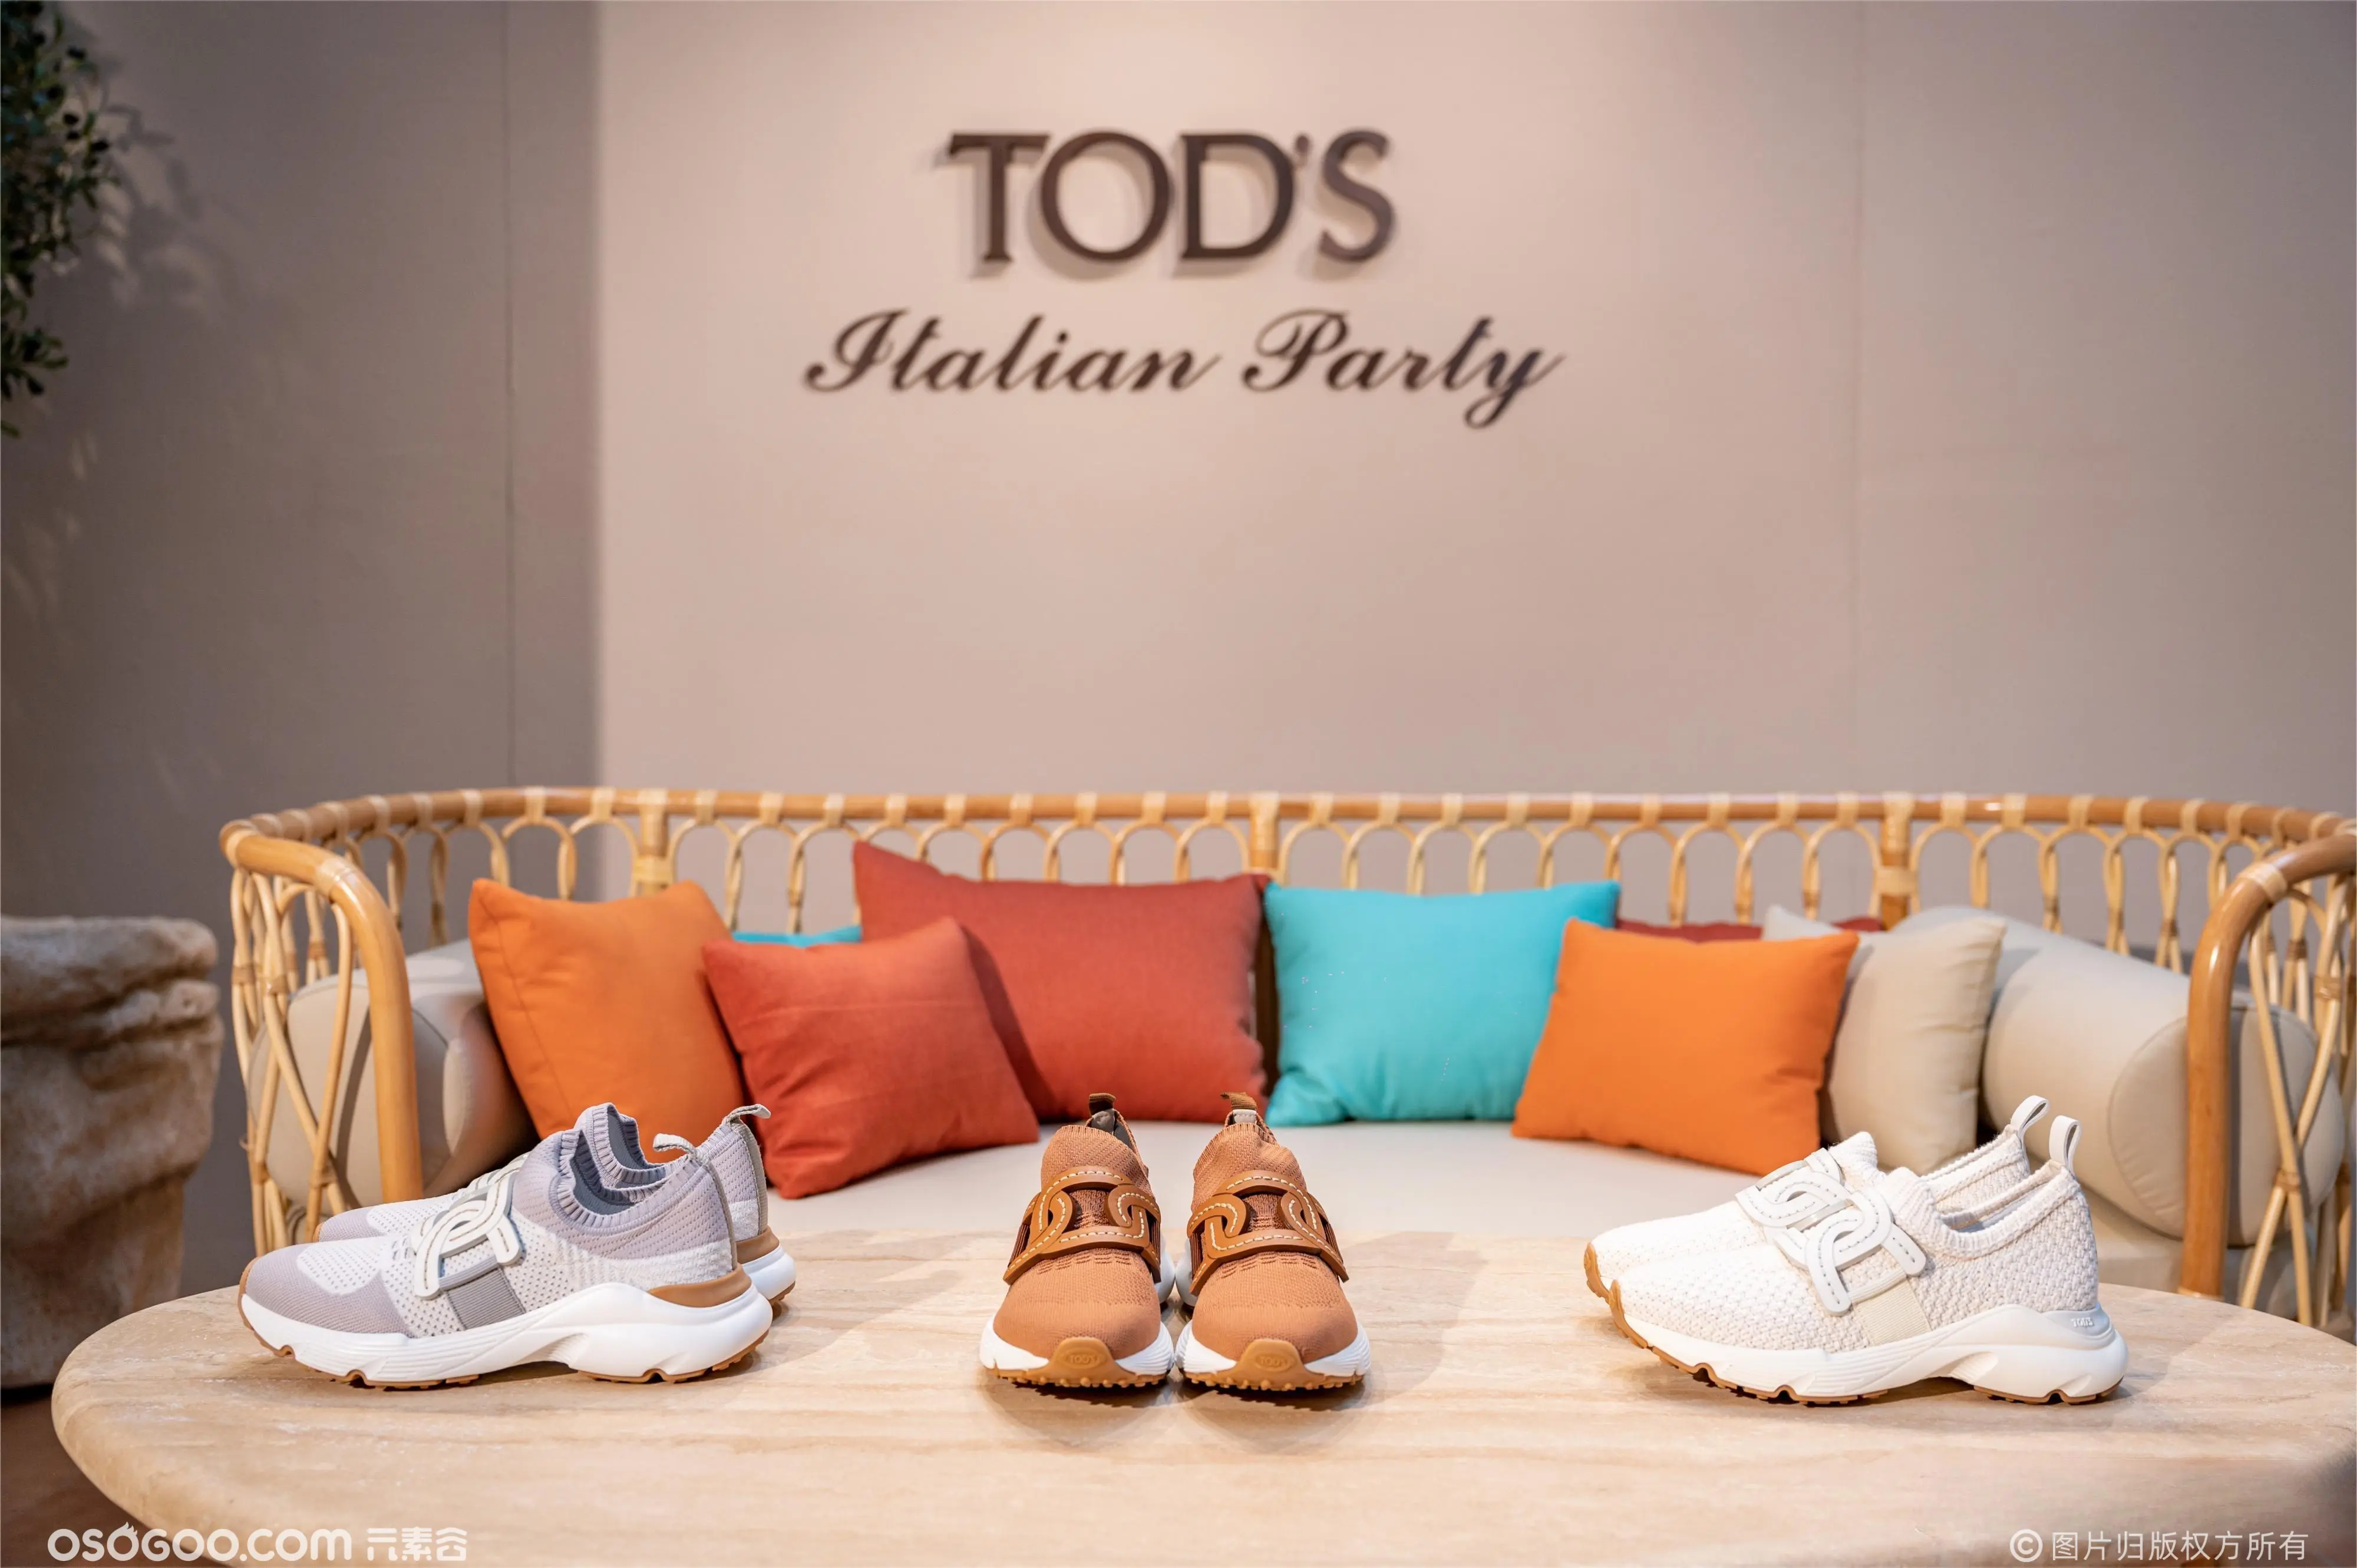 TOD’S Italian Party意式派对限时展